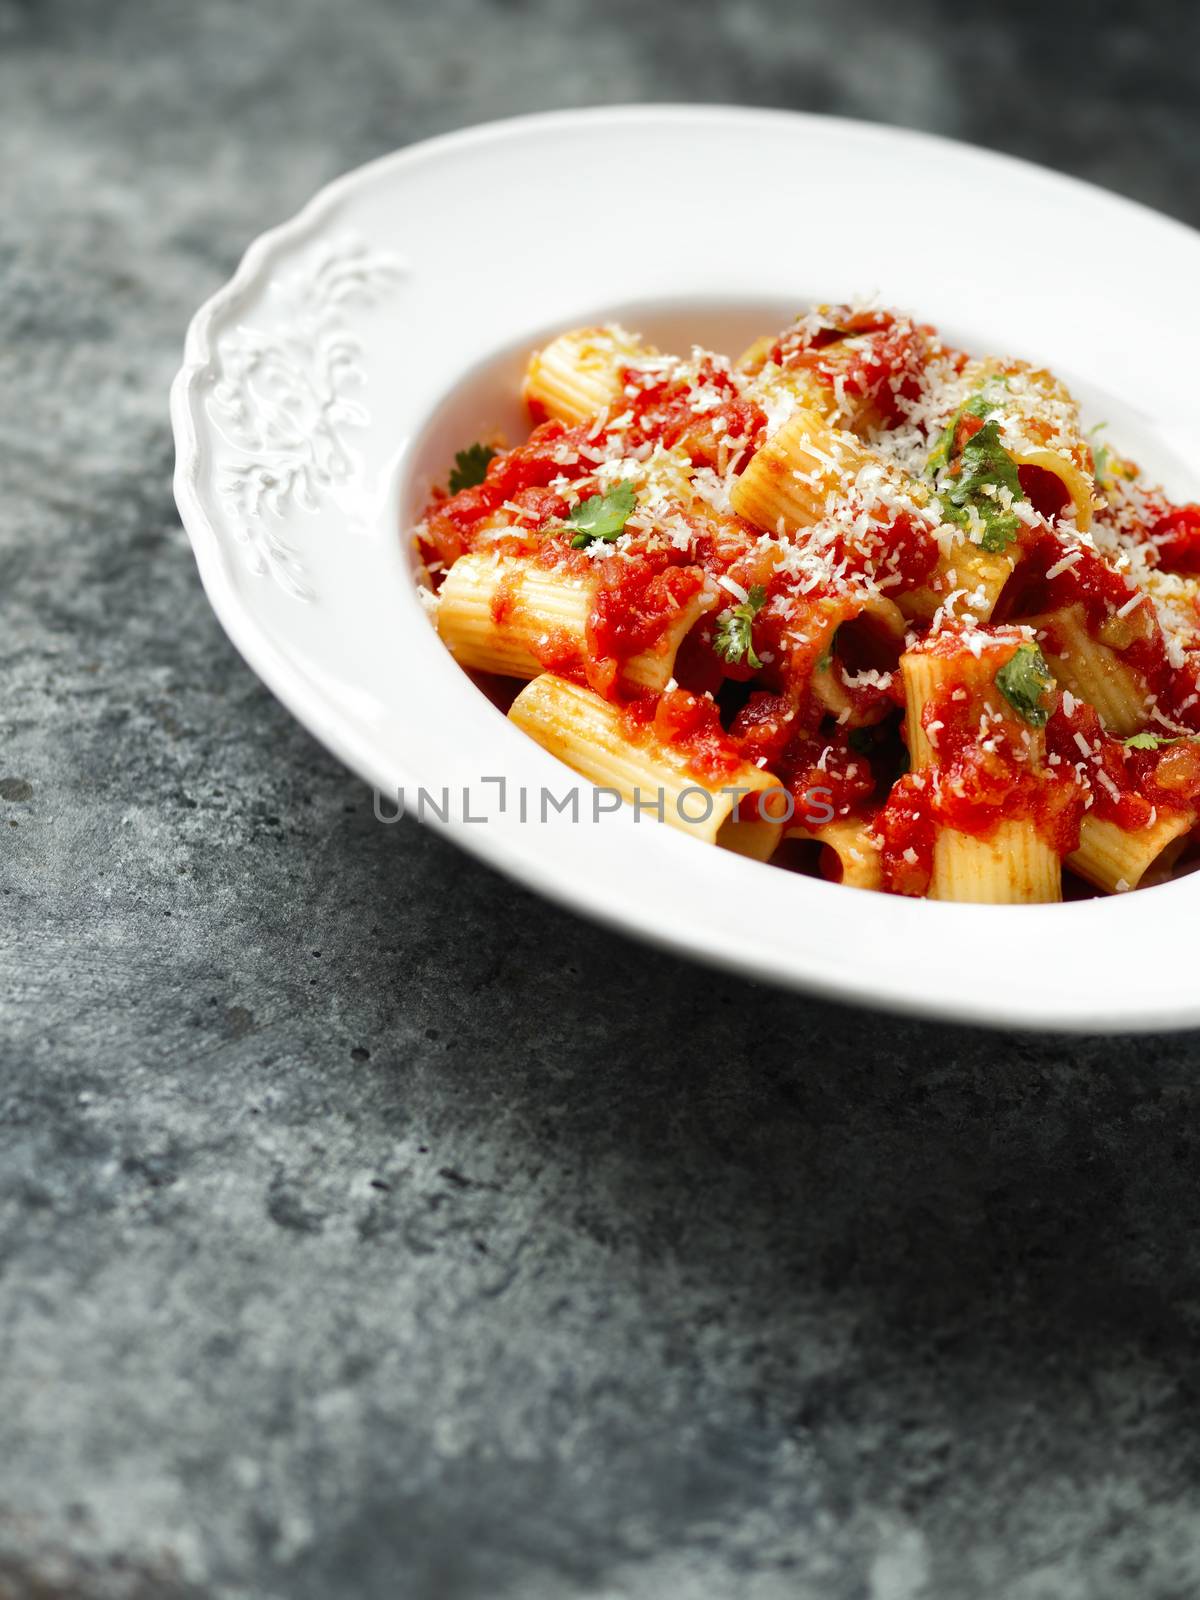 rustic italian rigatoni pasta in tomato sauce by zkruger